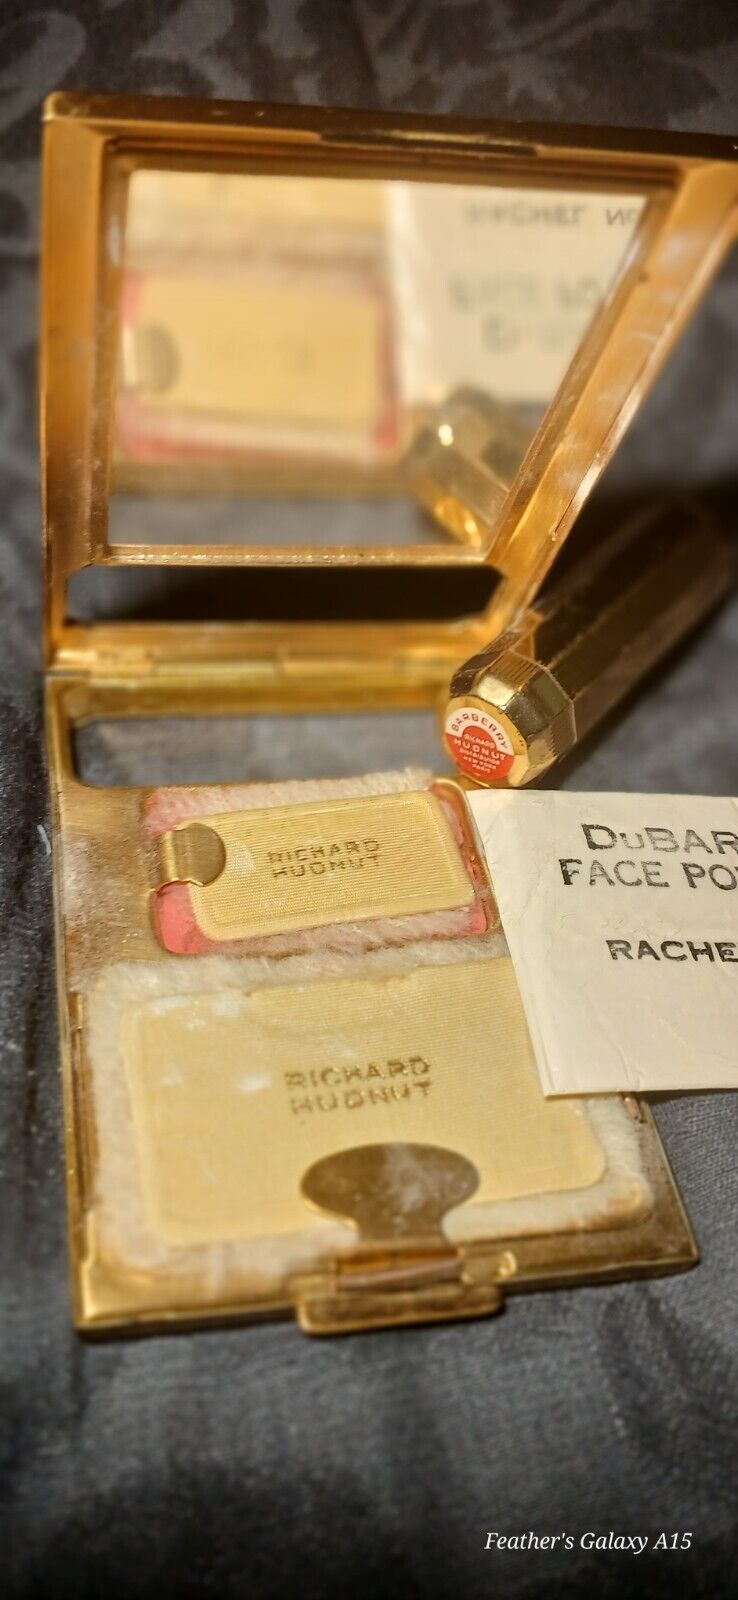 Vintage 1930's Richard Hudnut/Dubarry Compact W/Powder, Rouge & Lipstick